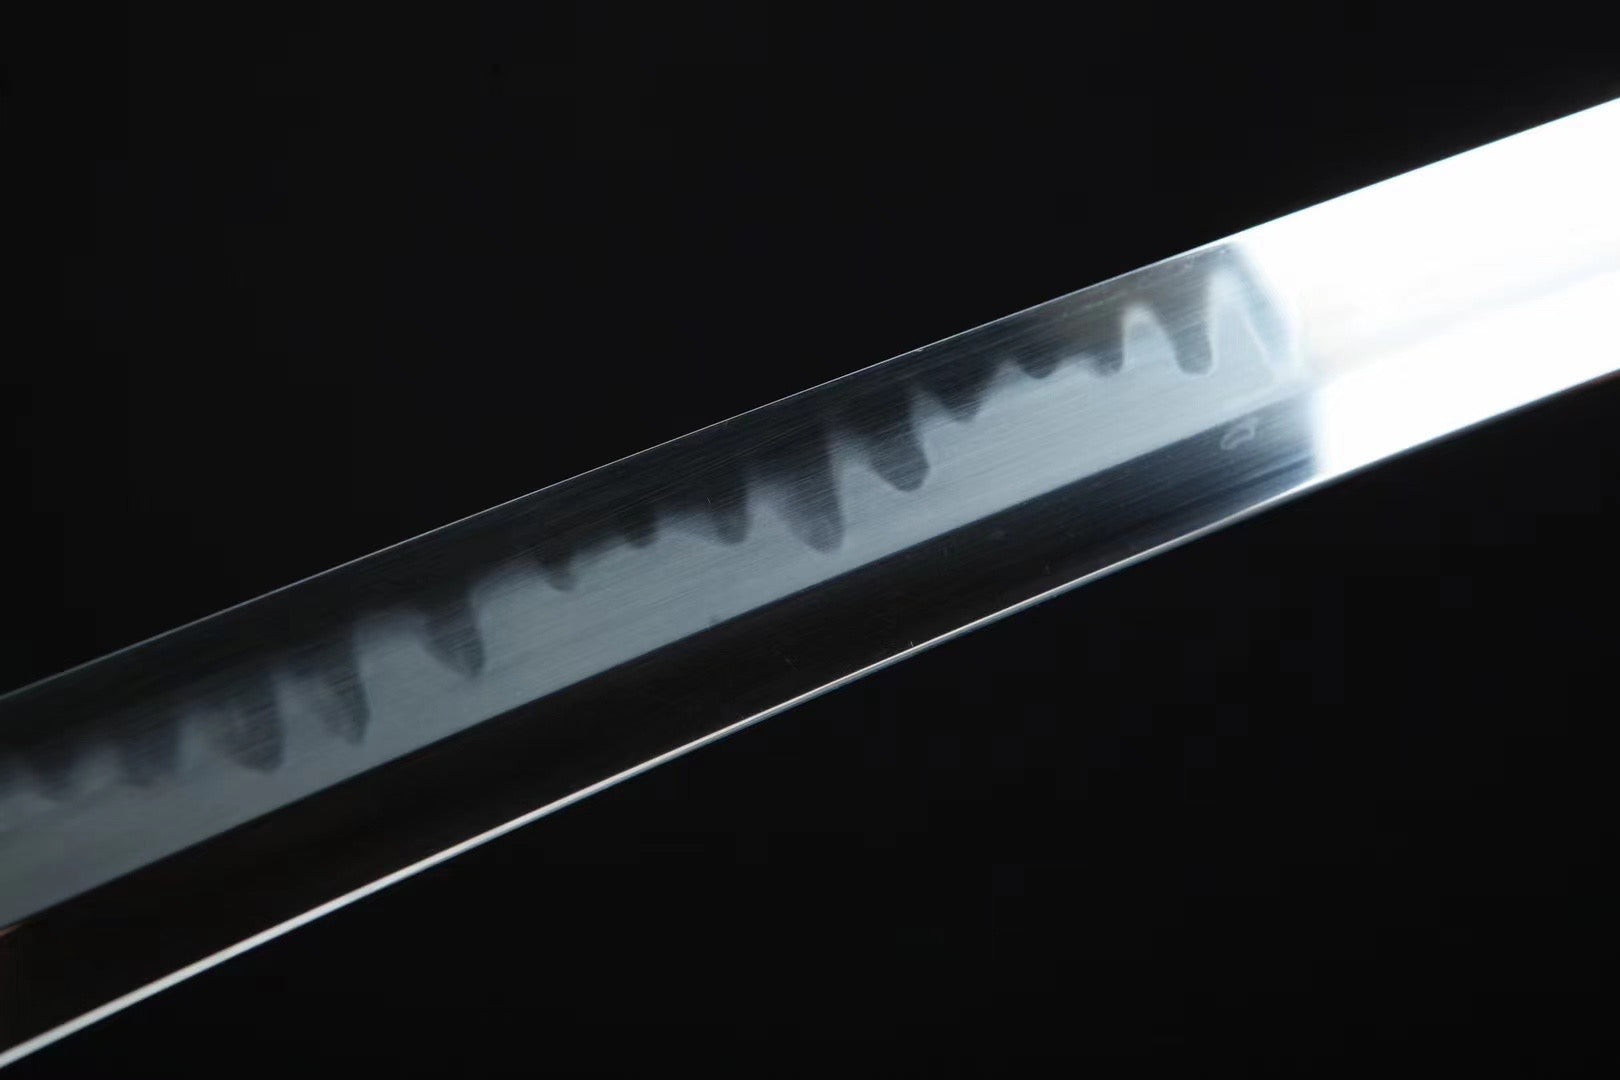 T10 High Carbon Steel Clay Tempered With Hamon Rage Dragon Katana Sword,Real Handmade Japanese Samurai Sword Full Tang